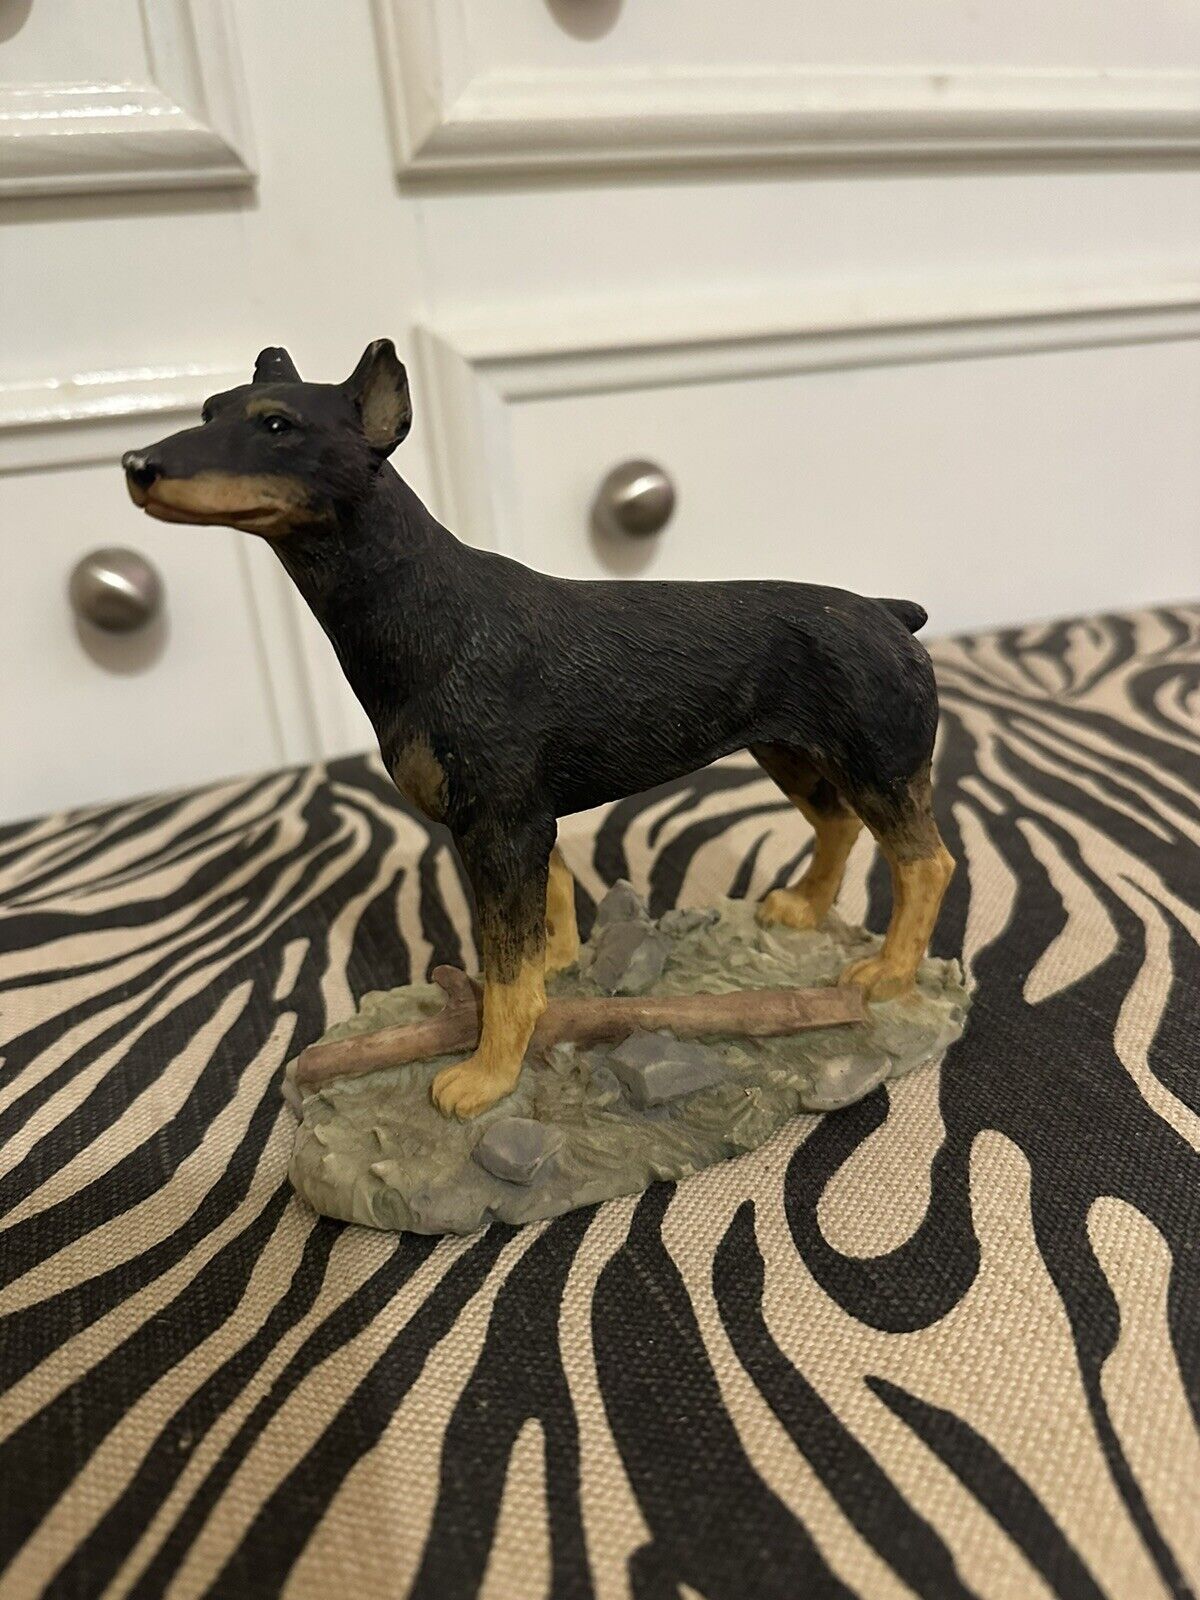 DOBERMAN PINSCHER FIGUREINE Medium size 5in. Dog Statue Pre-Black( Chipped Ear)